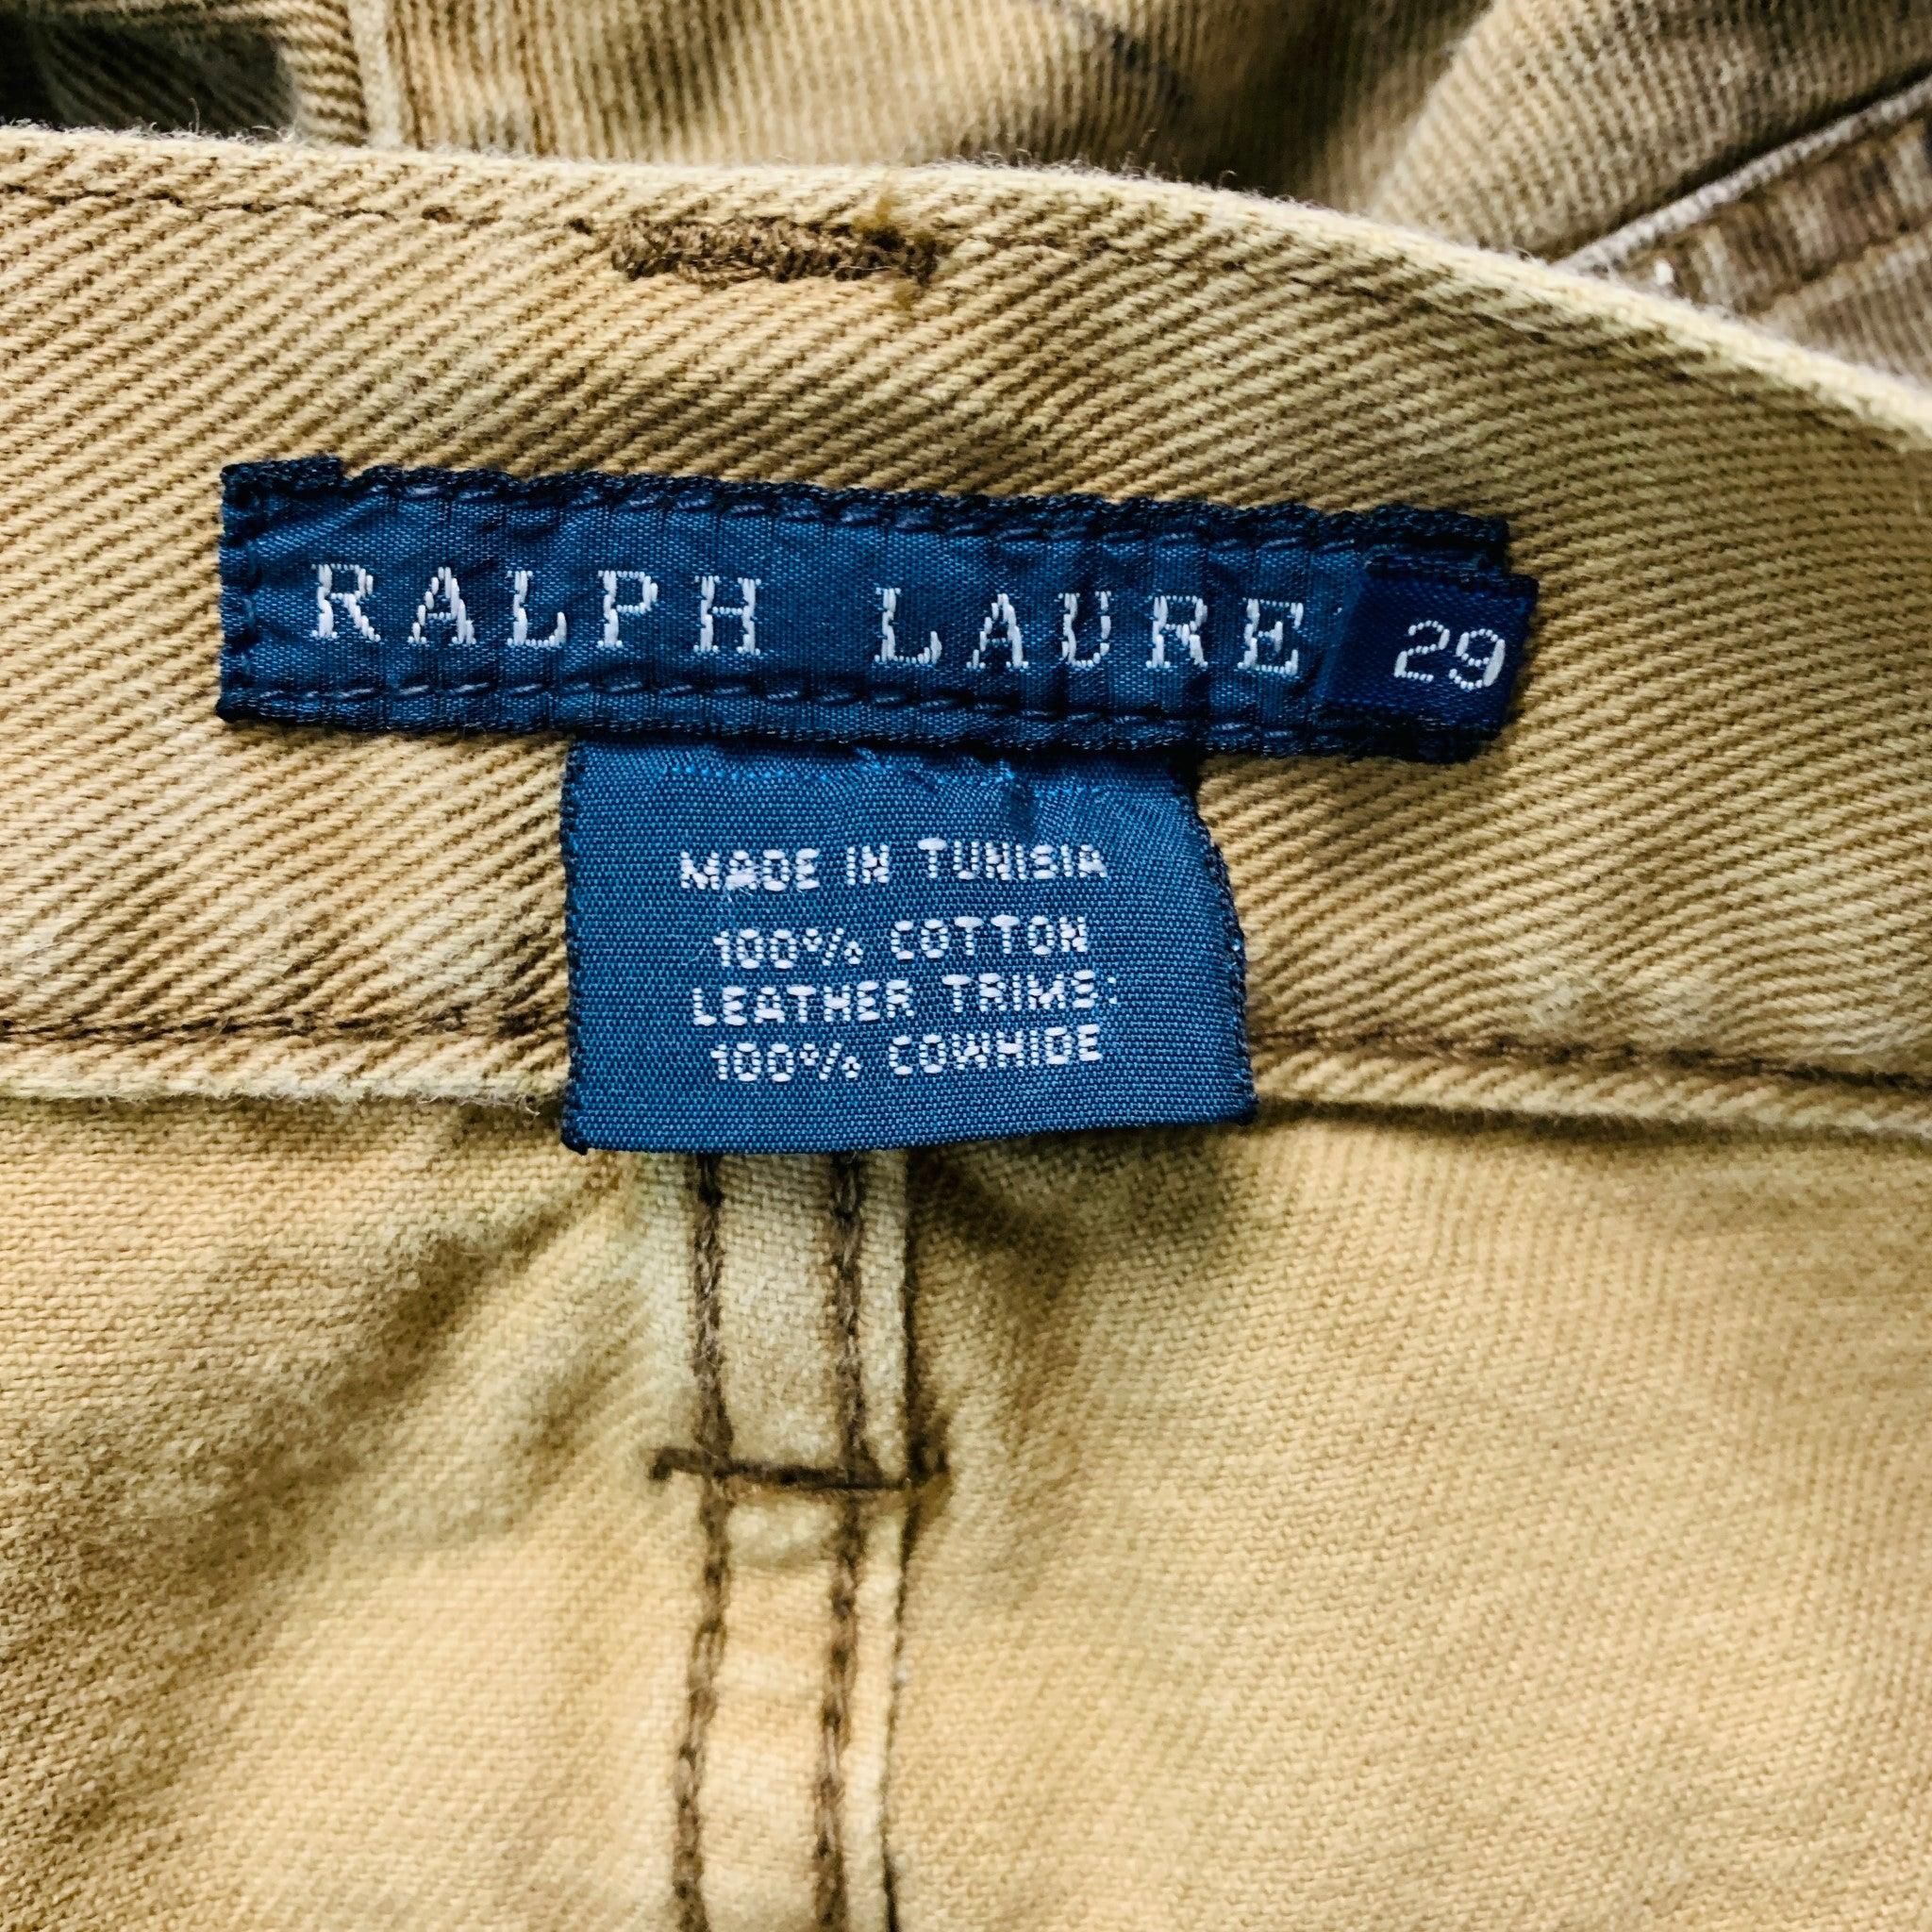 Women's RALPH LAUREN Size 29 Khaki Grey Cotton Distressed Leather Jeans For Sale